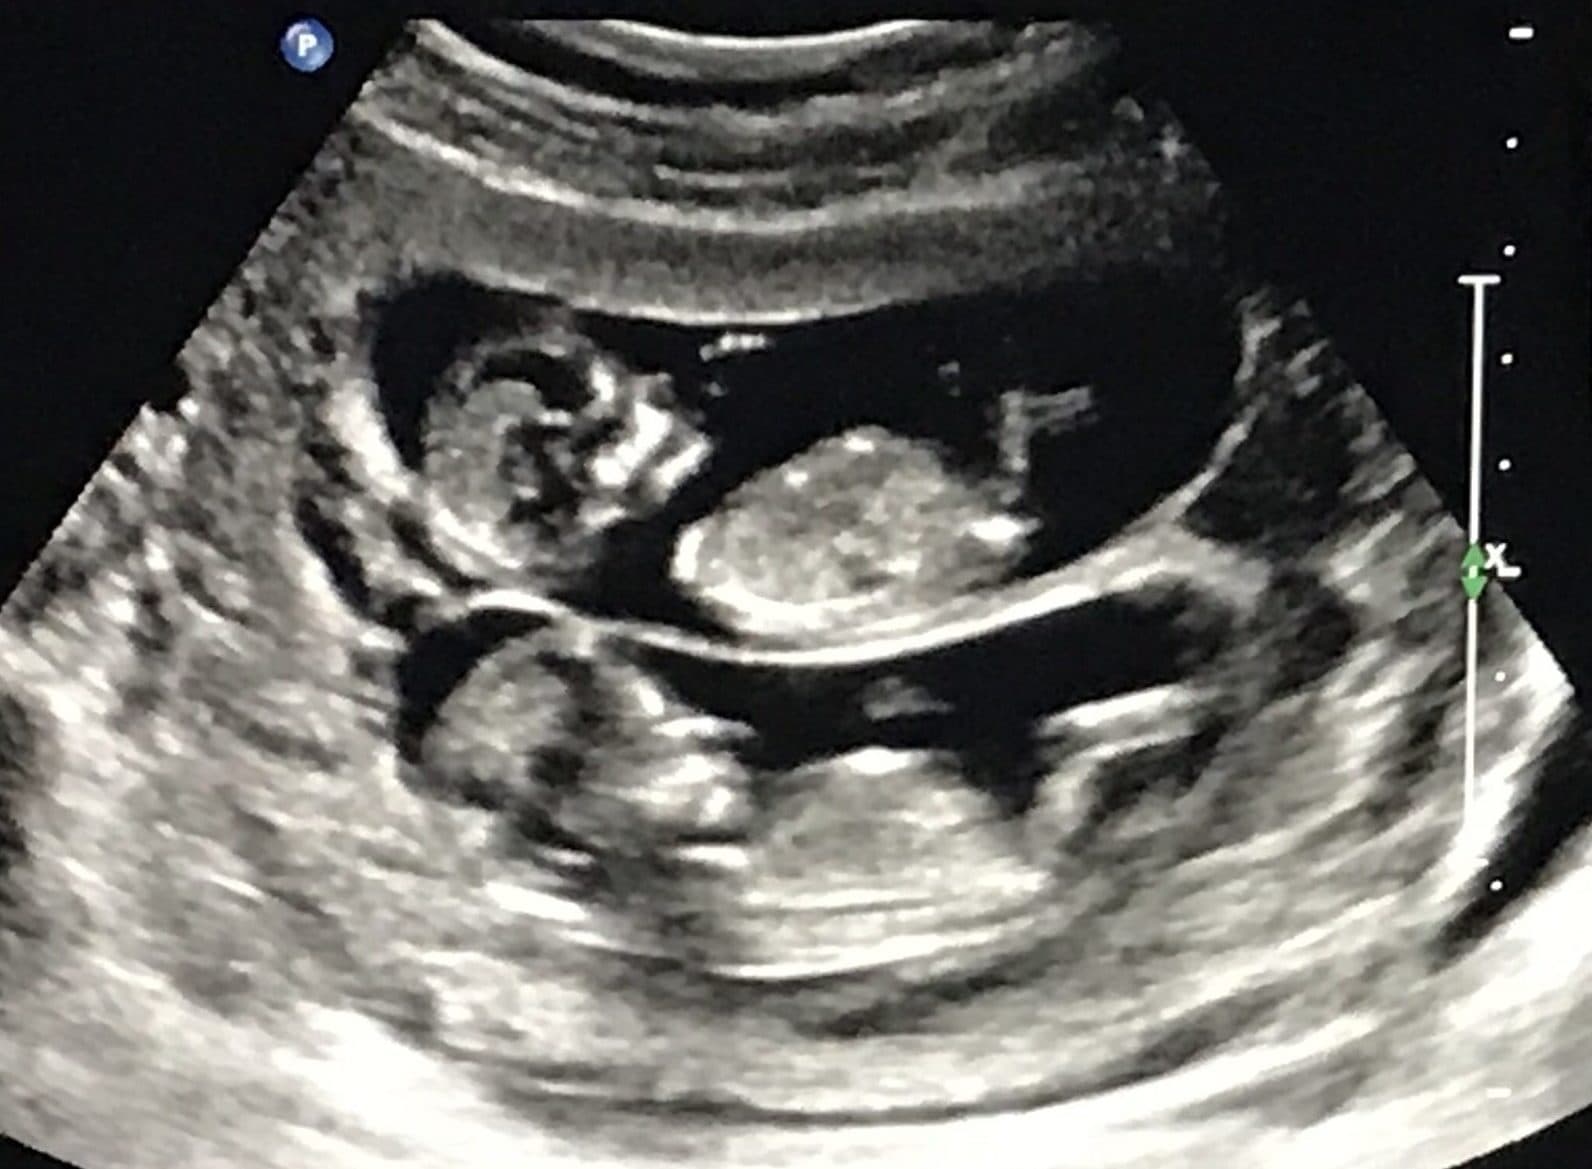 13 Weeks Pregnant Ultrasound Twins